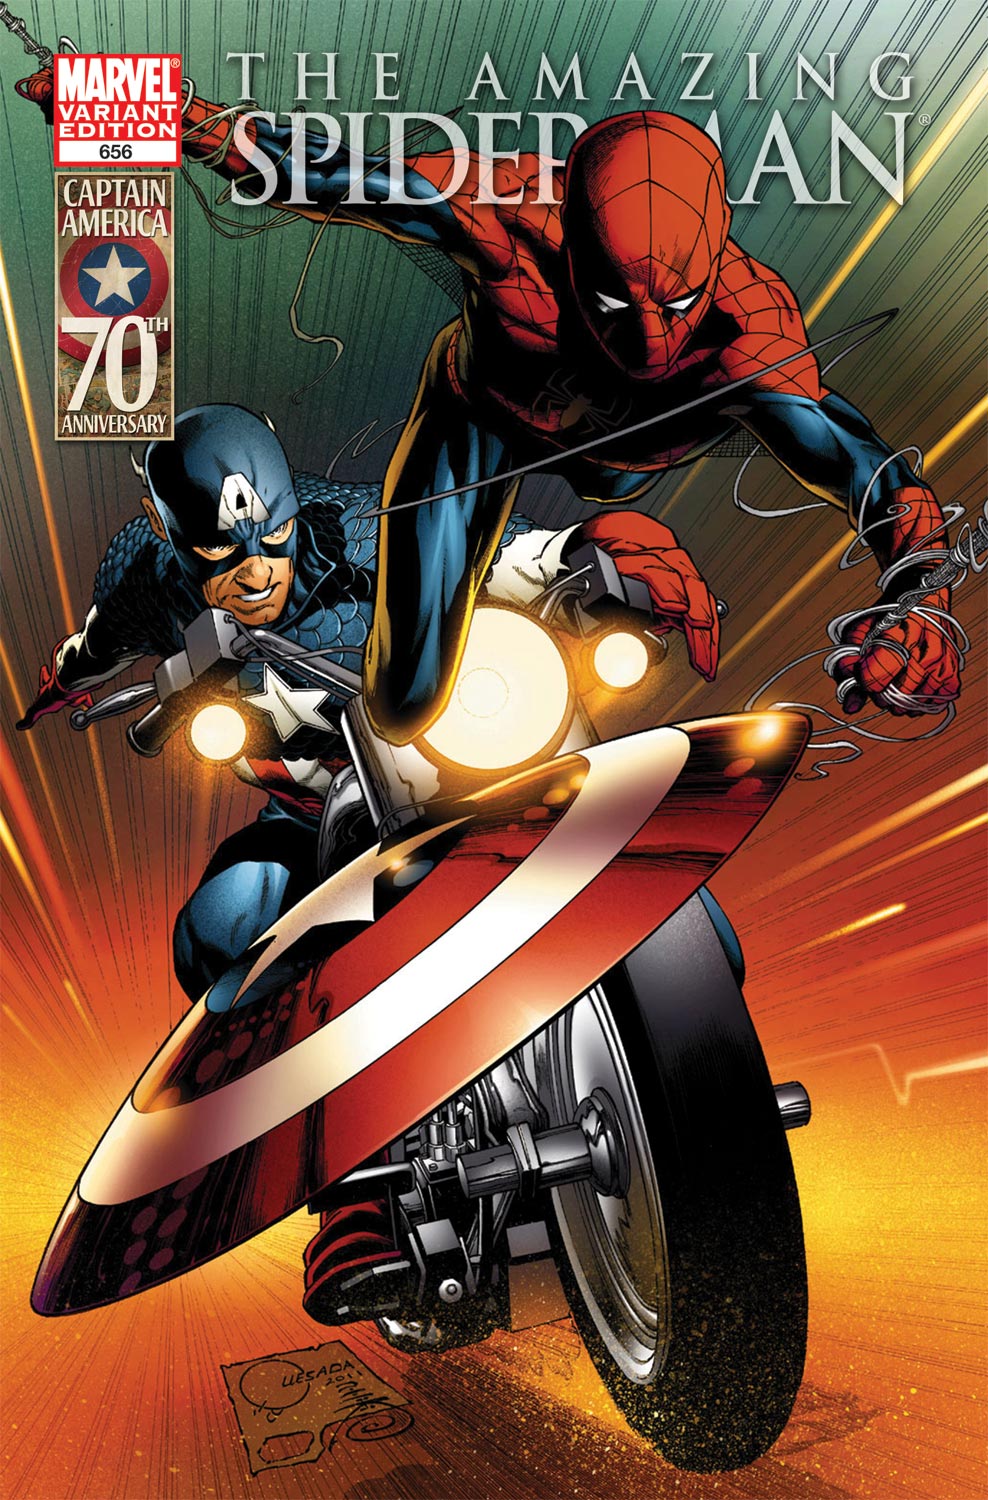 Amazing Spider-Man (1999) #656 (CAPTAIN AMERICA 70TH ANNIVERSARY VARIANT)